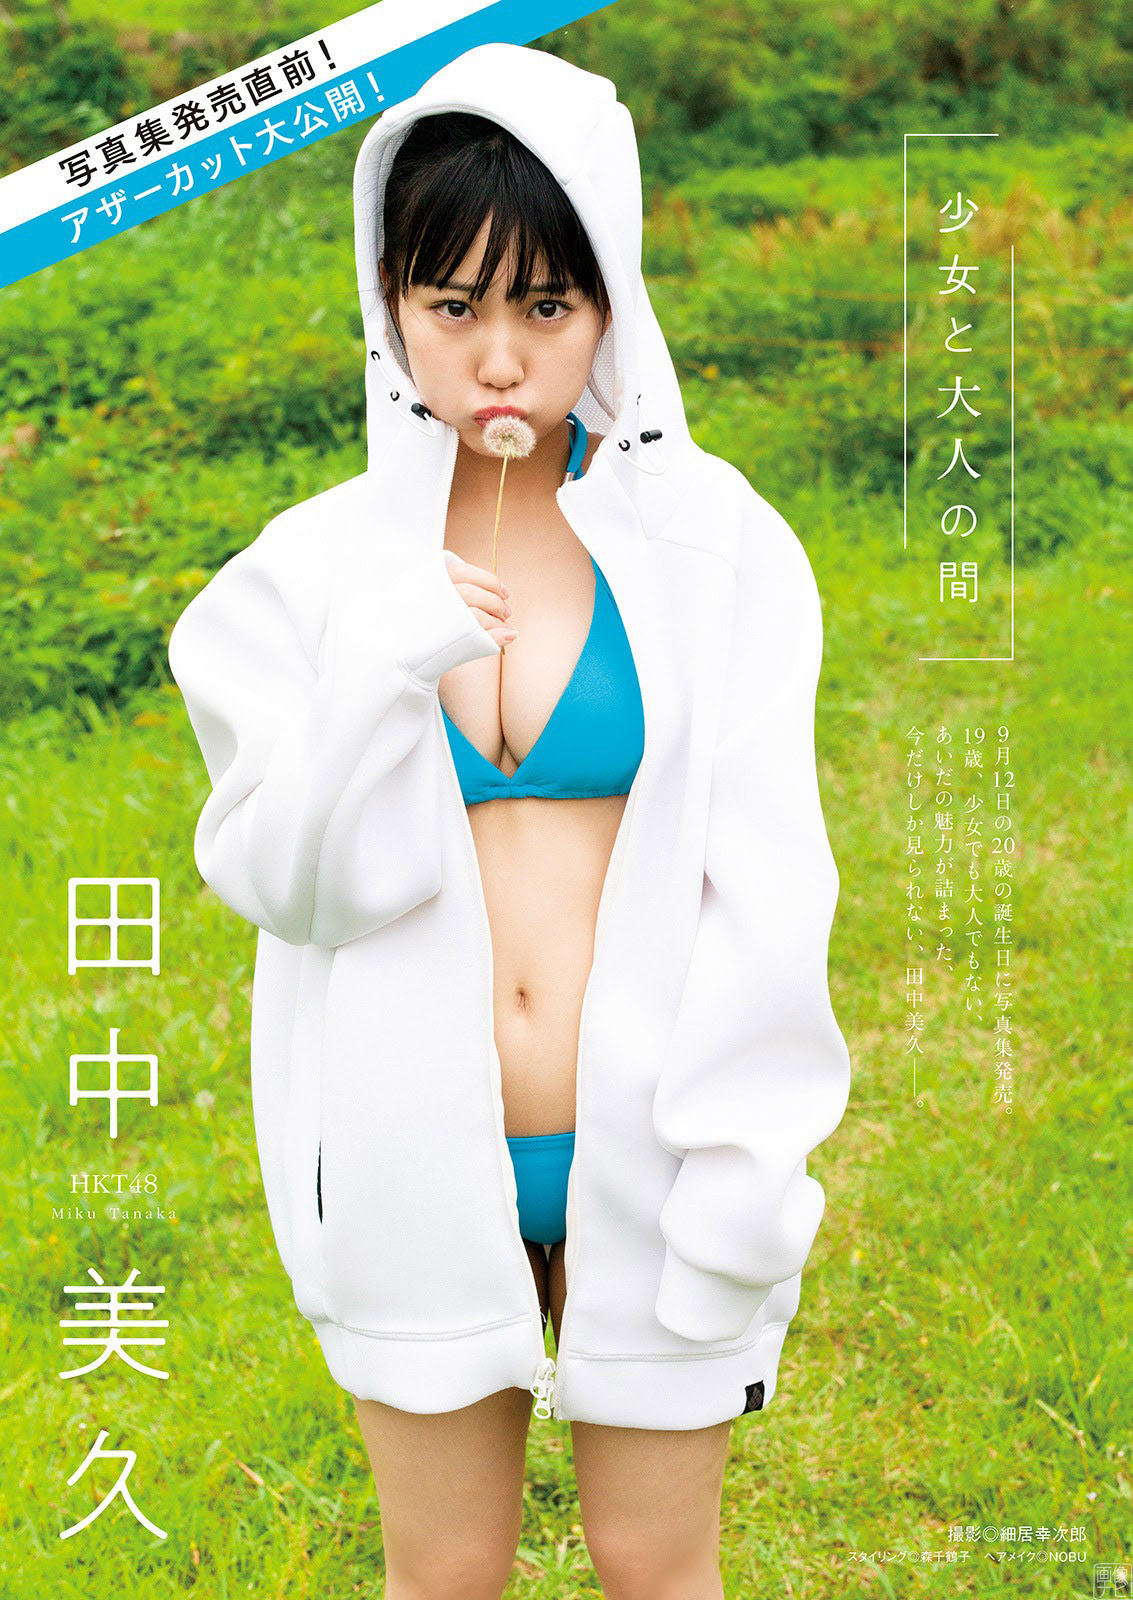 HKT４８の至寶 田中美久の胸がスゴくて可愛いグラビア畫像--2021/10/18追加 ここから-- - 亞洲美女 -